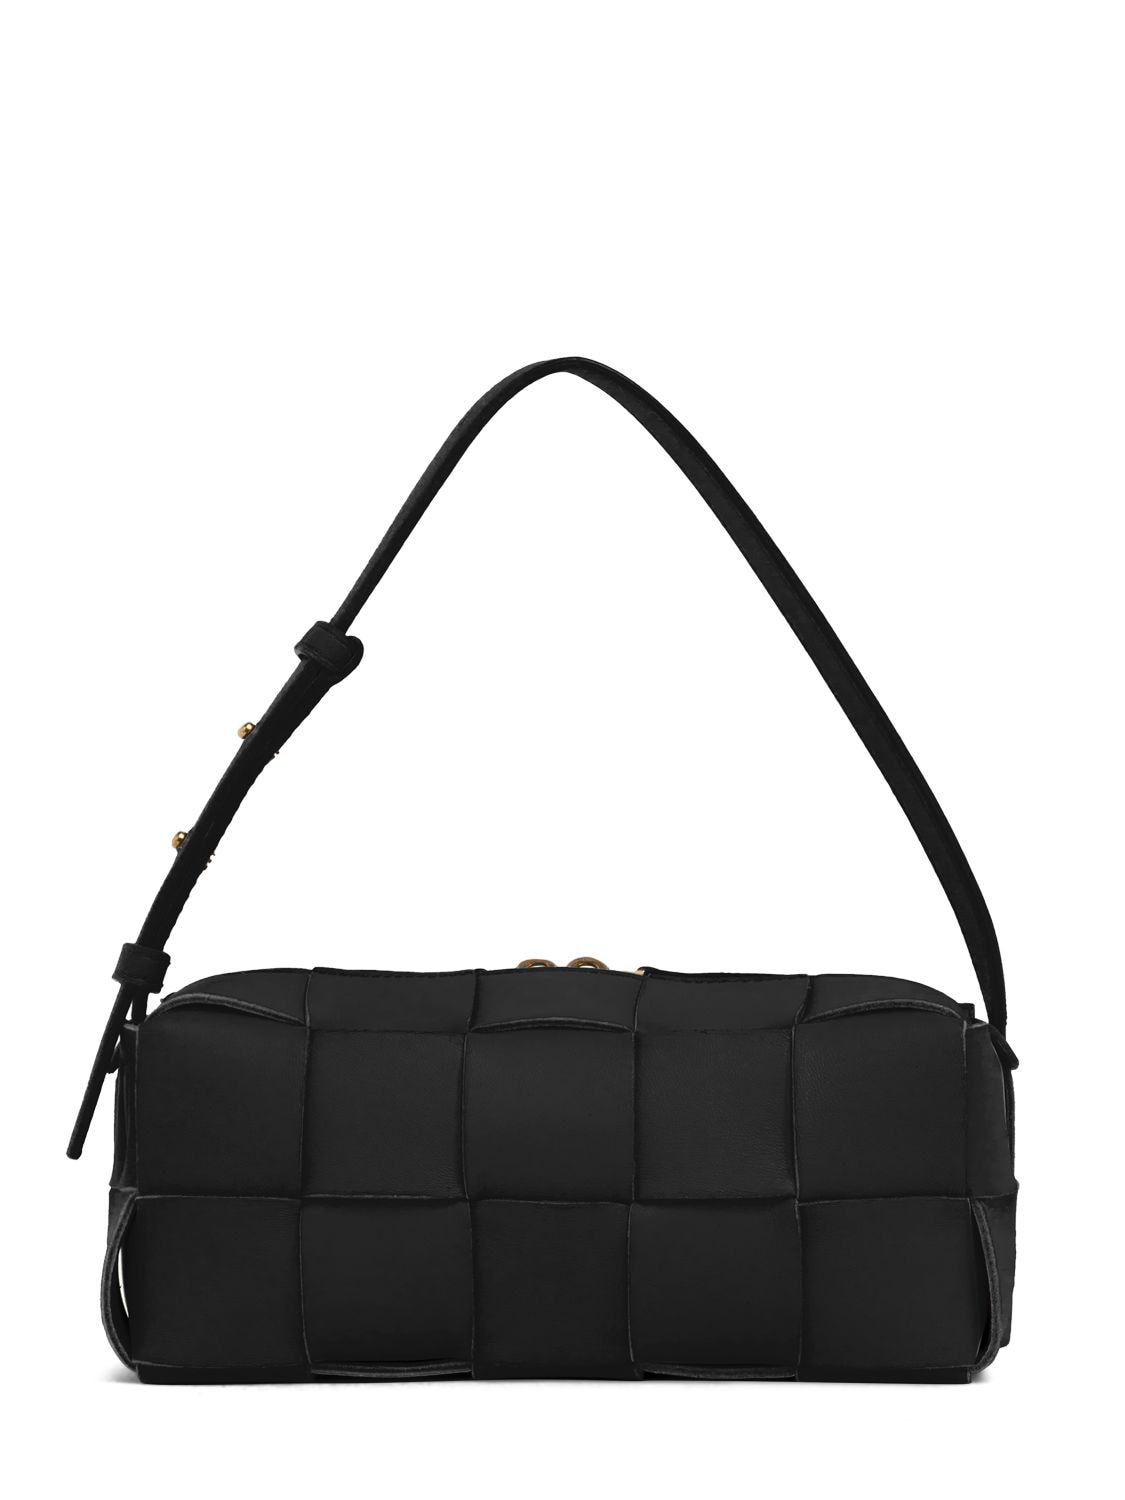 Bottega Veneta Leather Shoulder Bag In Black